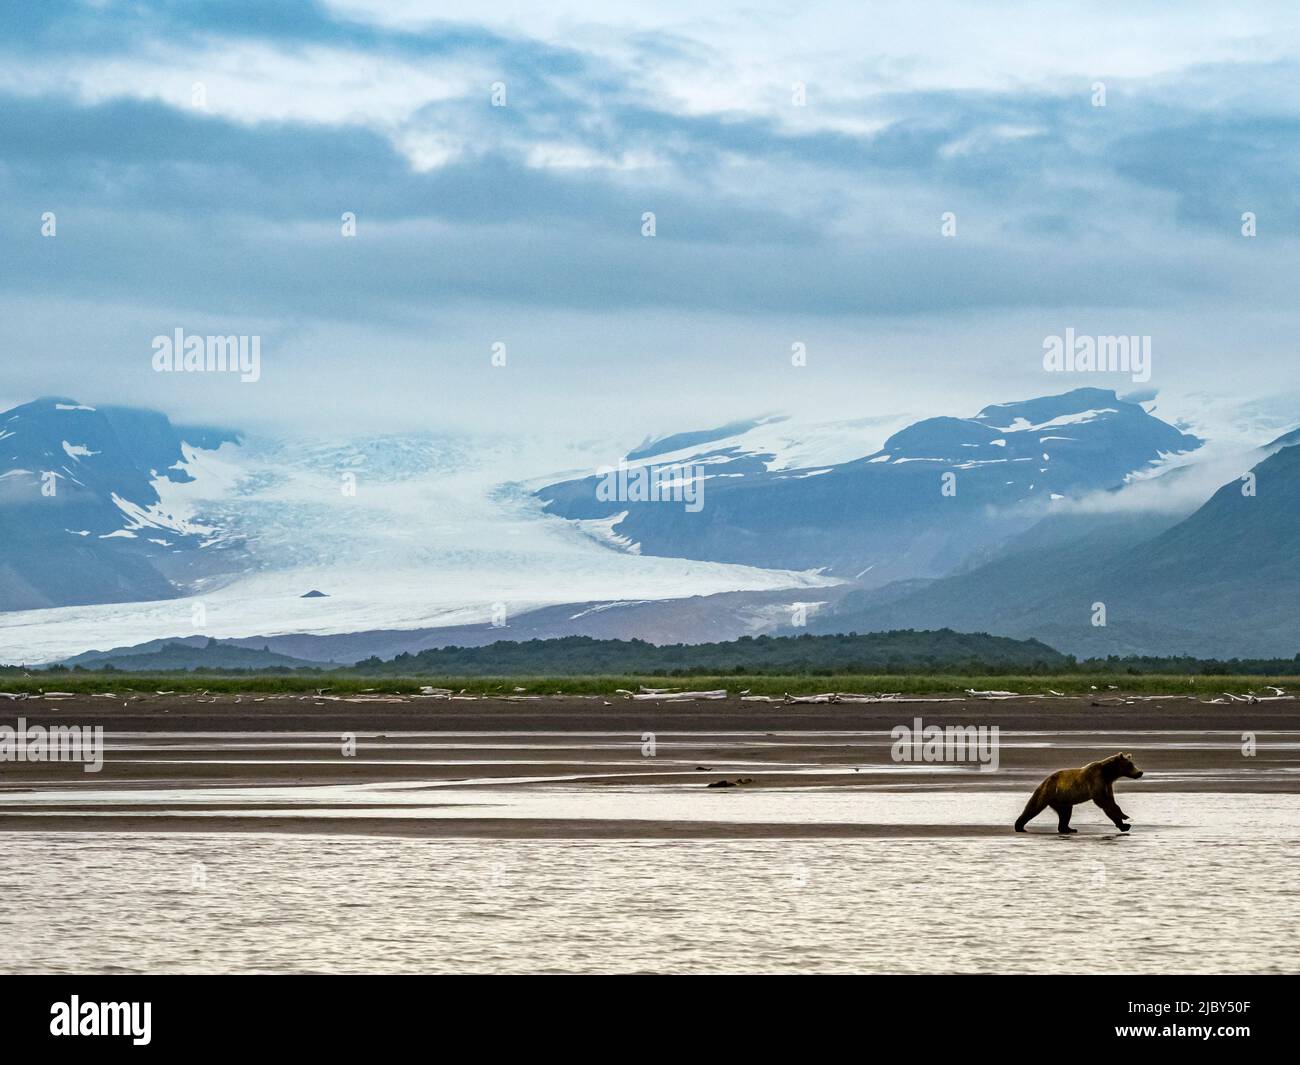 rovides background for Coastal Brown Bear (Ursus arctos horribilis) chasing salmon at low tide in Hallo Bay, Katmai National Park and Preserve, Alaska Stock Photo